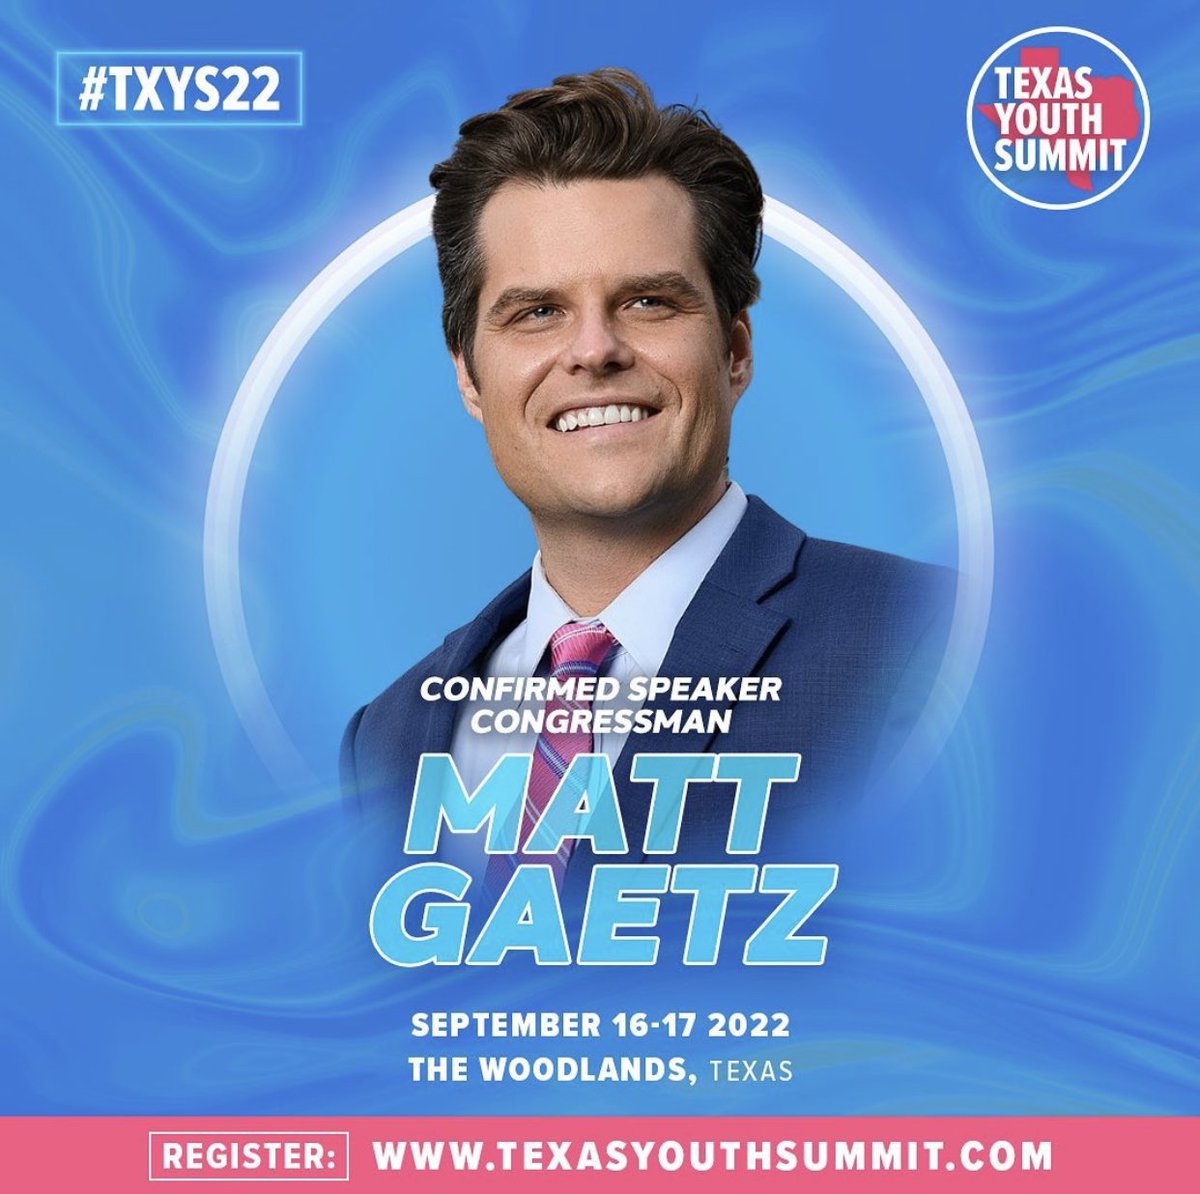 Matt Gaetz going to the Texas Youth Summit to see if he can get a .. student loan.
#MattGaetz 
#mattgaetzistriggered